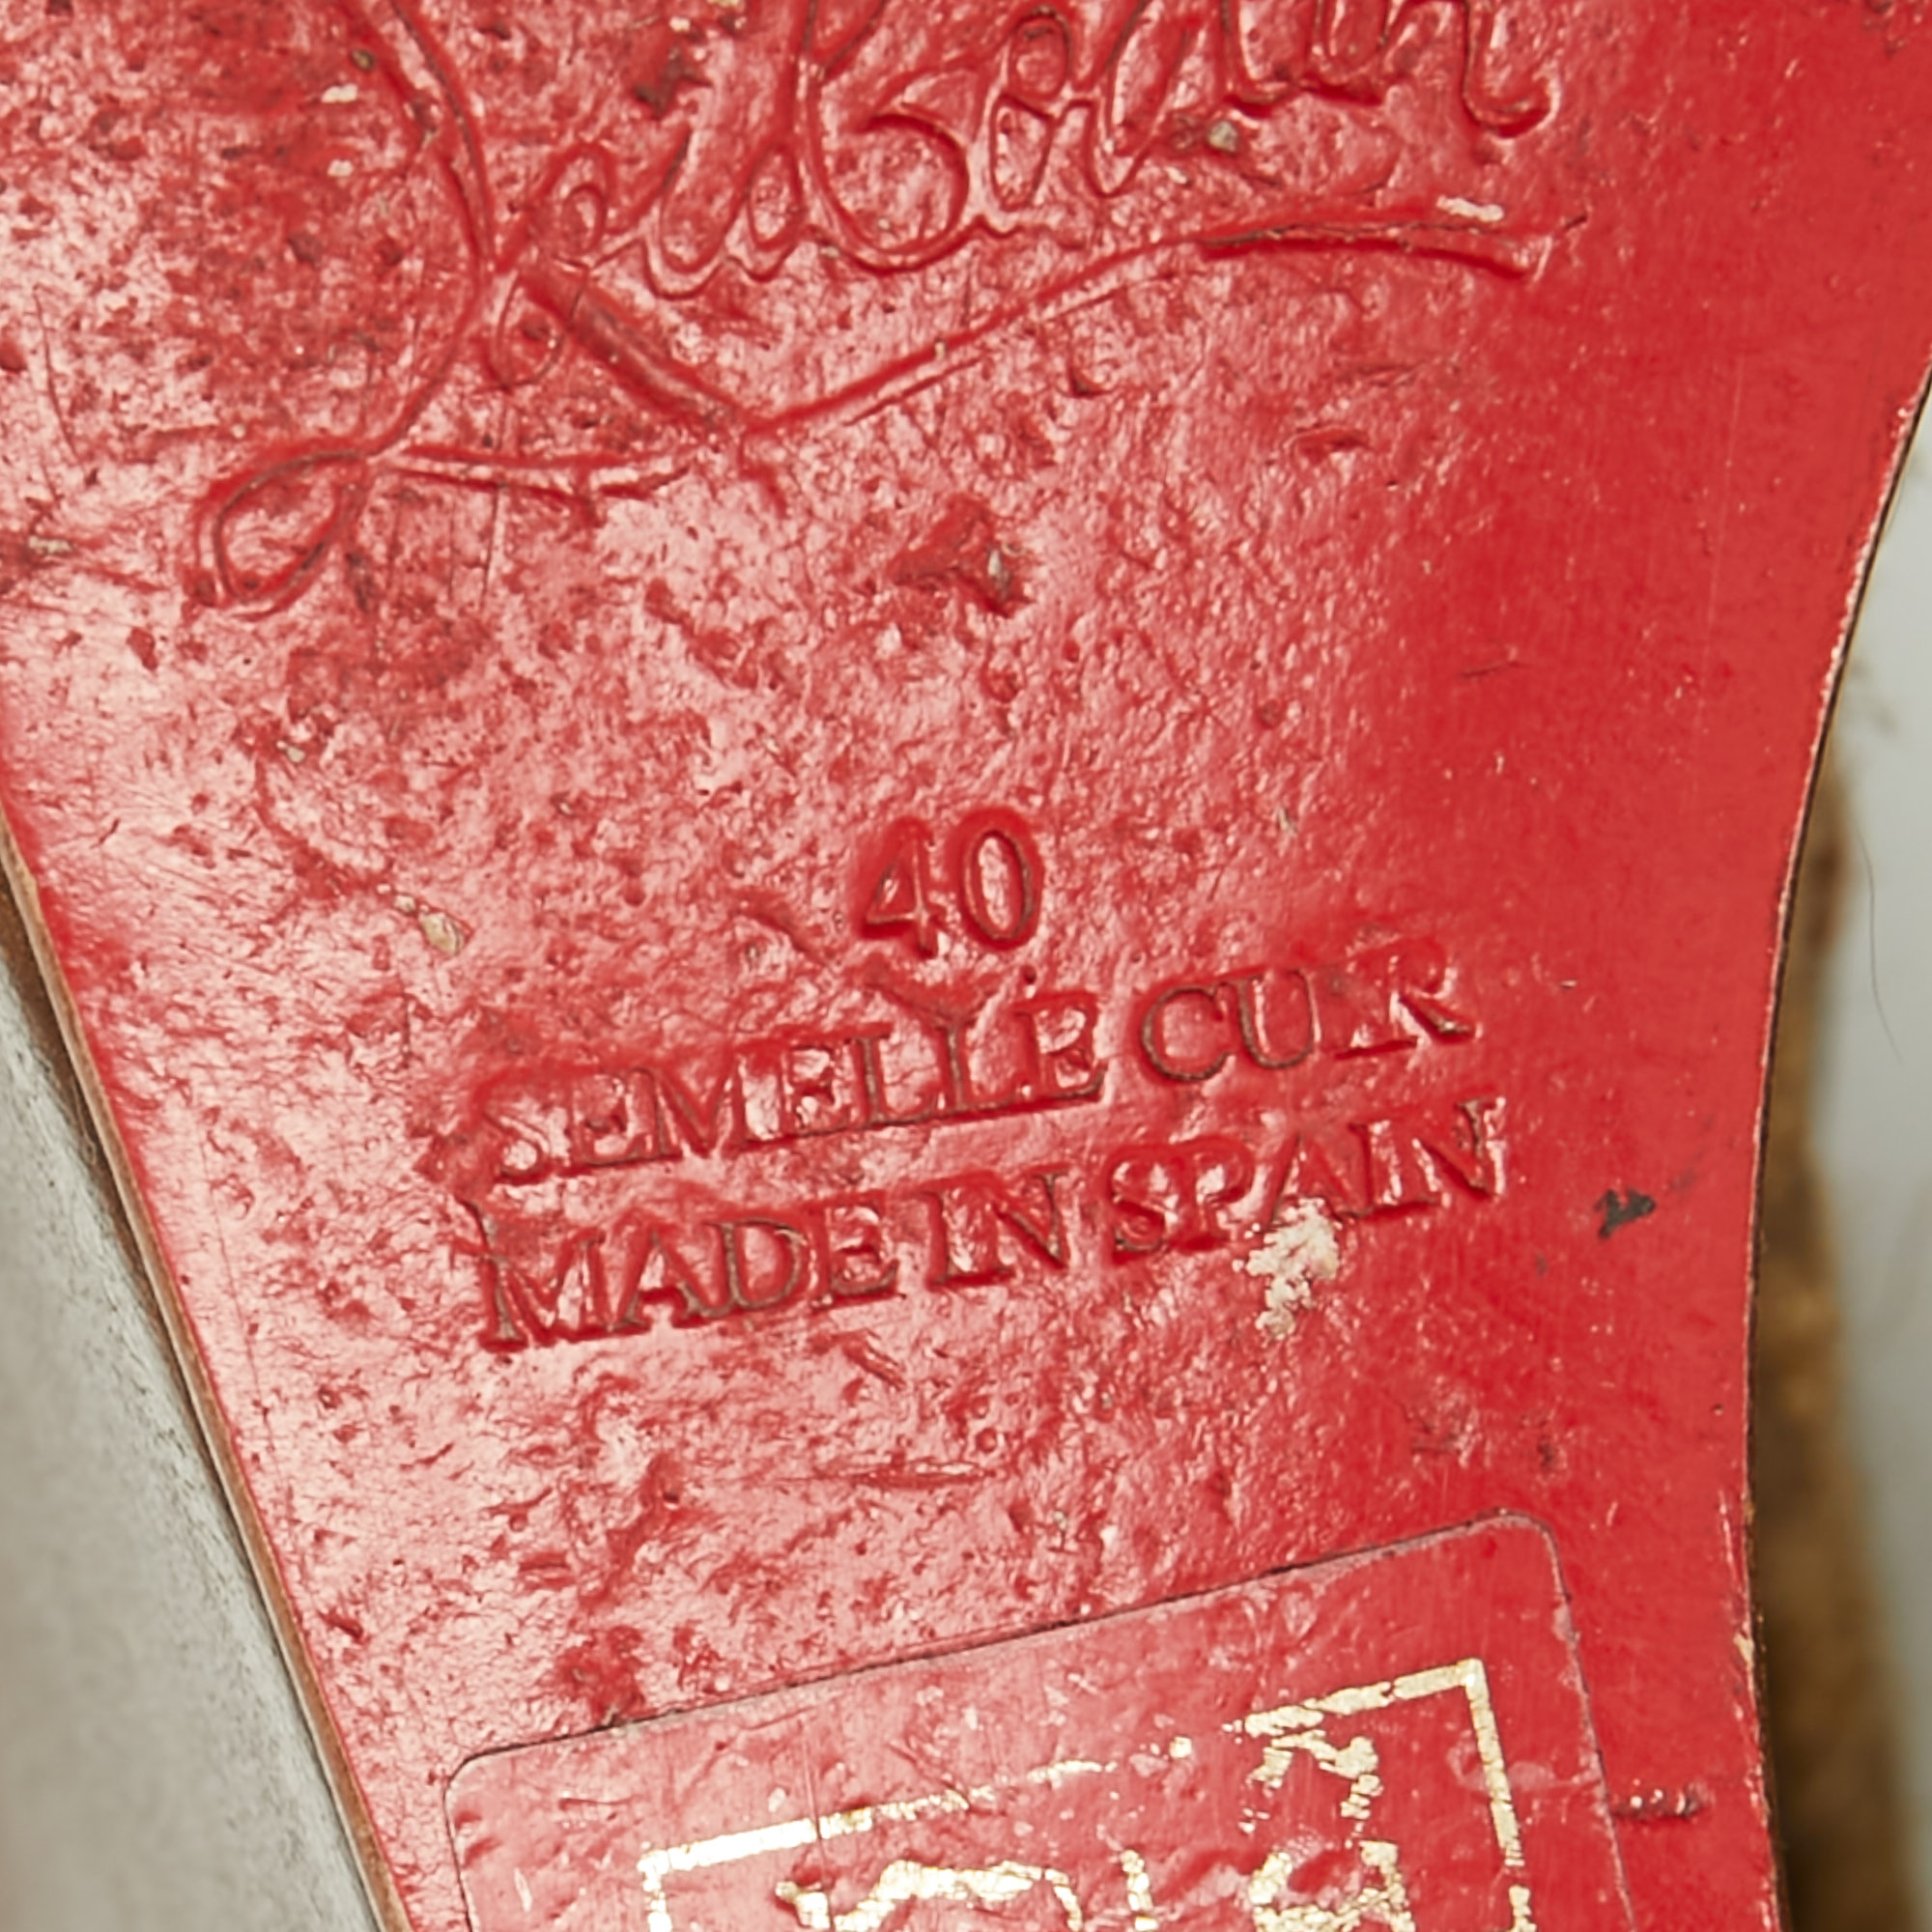 Christian Louboutin Metallic Bronze Leather Barcelona Espadrille Wedge Sandals Size 40